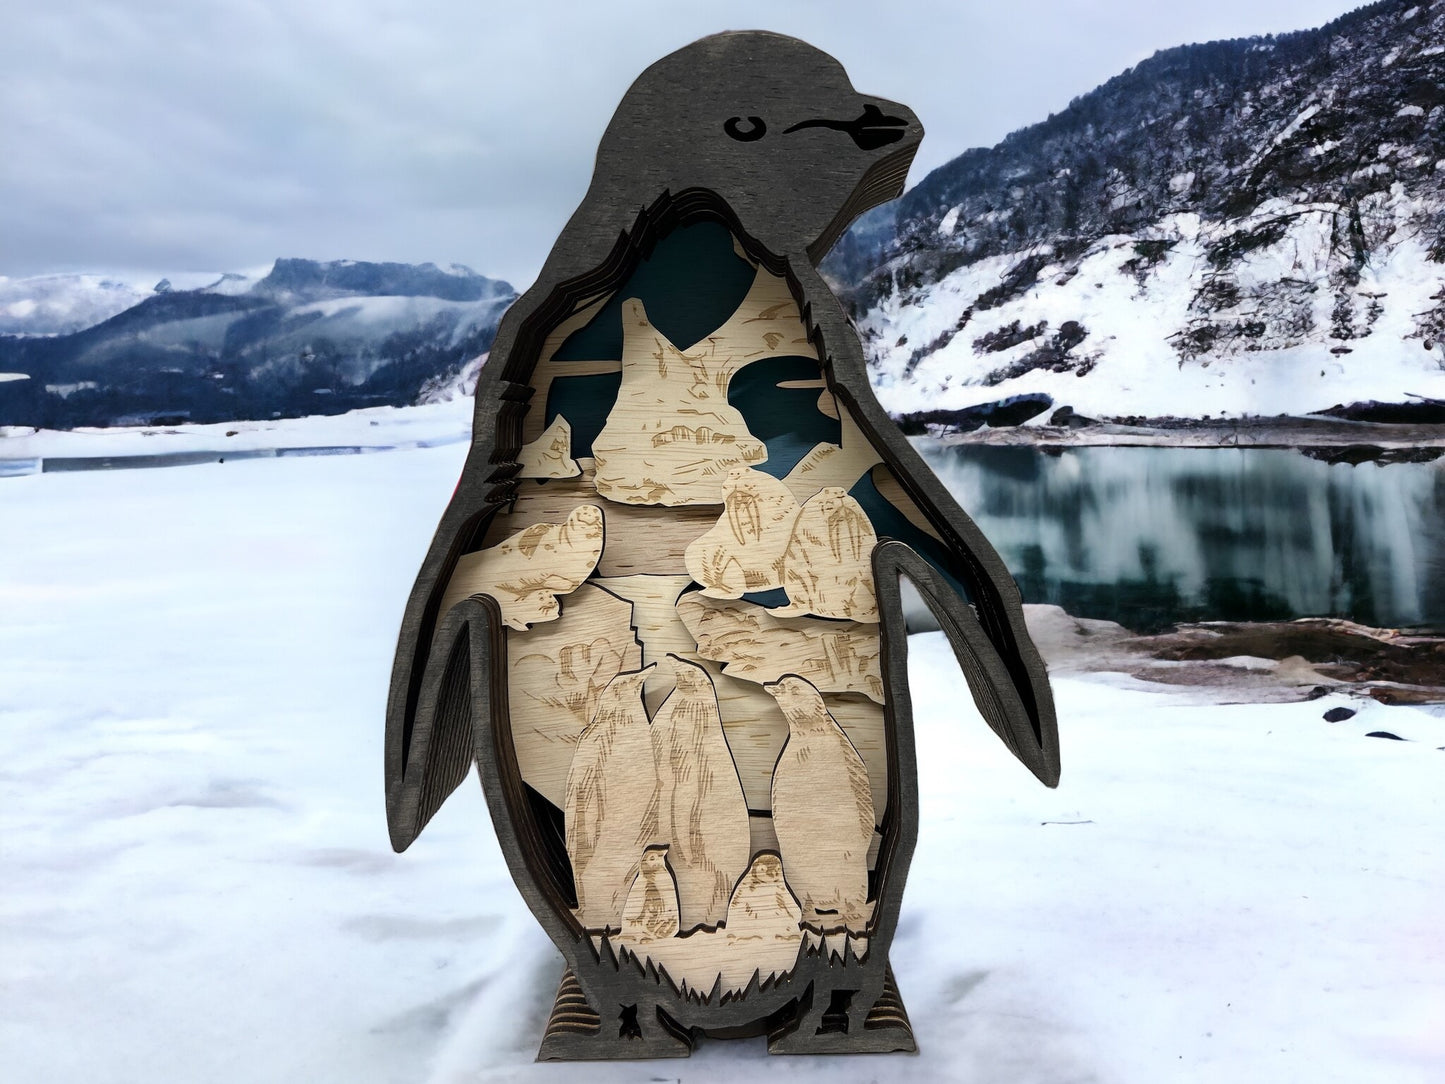 Caja de sombras 3D iluminada por pingüinos